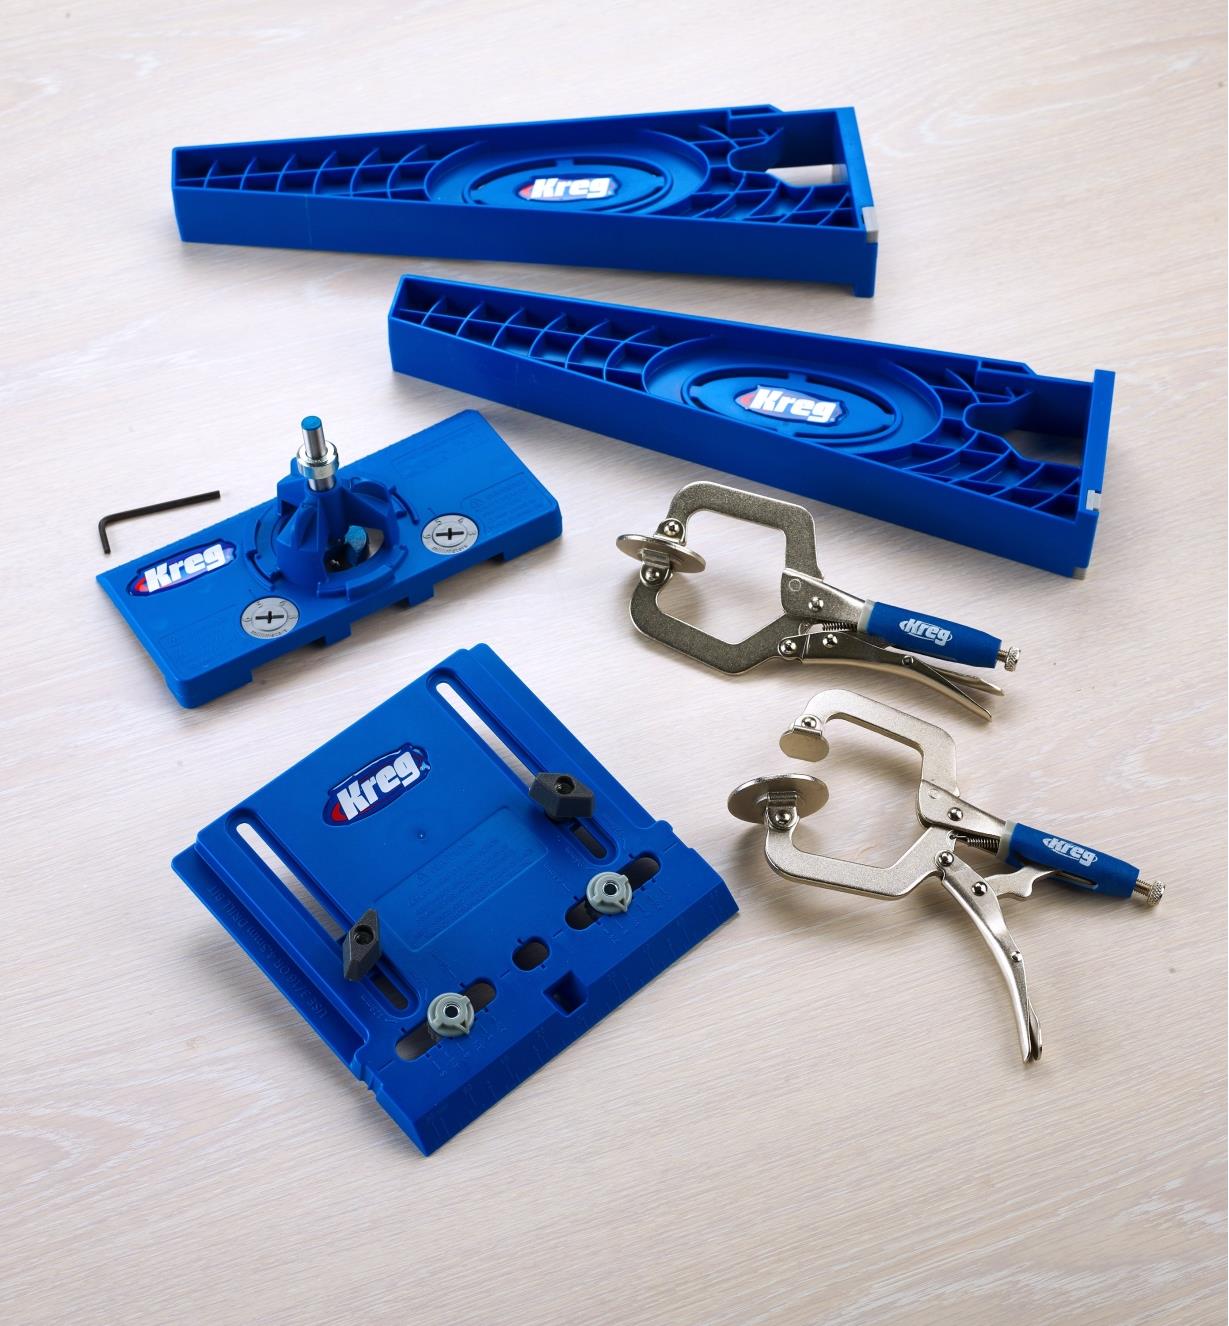 A Kreg European hinge jig, hardware jig, slide-mounting brackets, and jig clamps